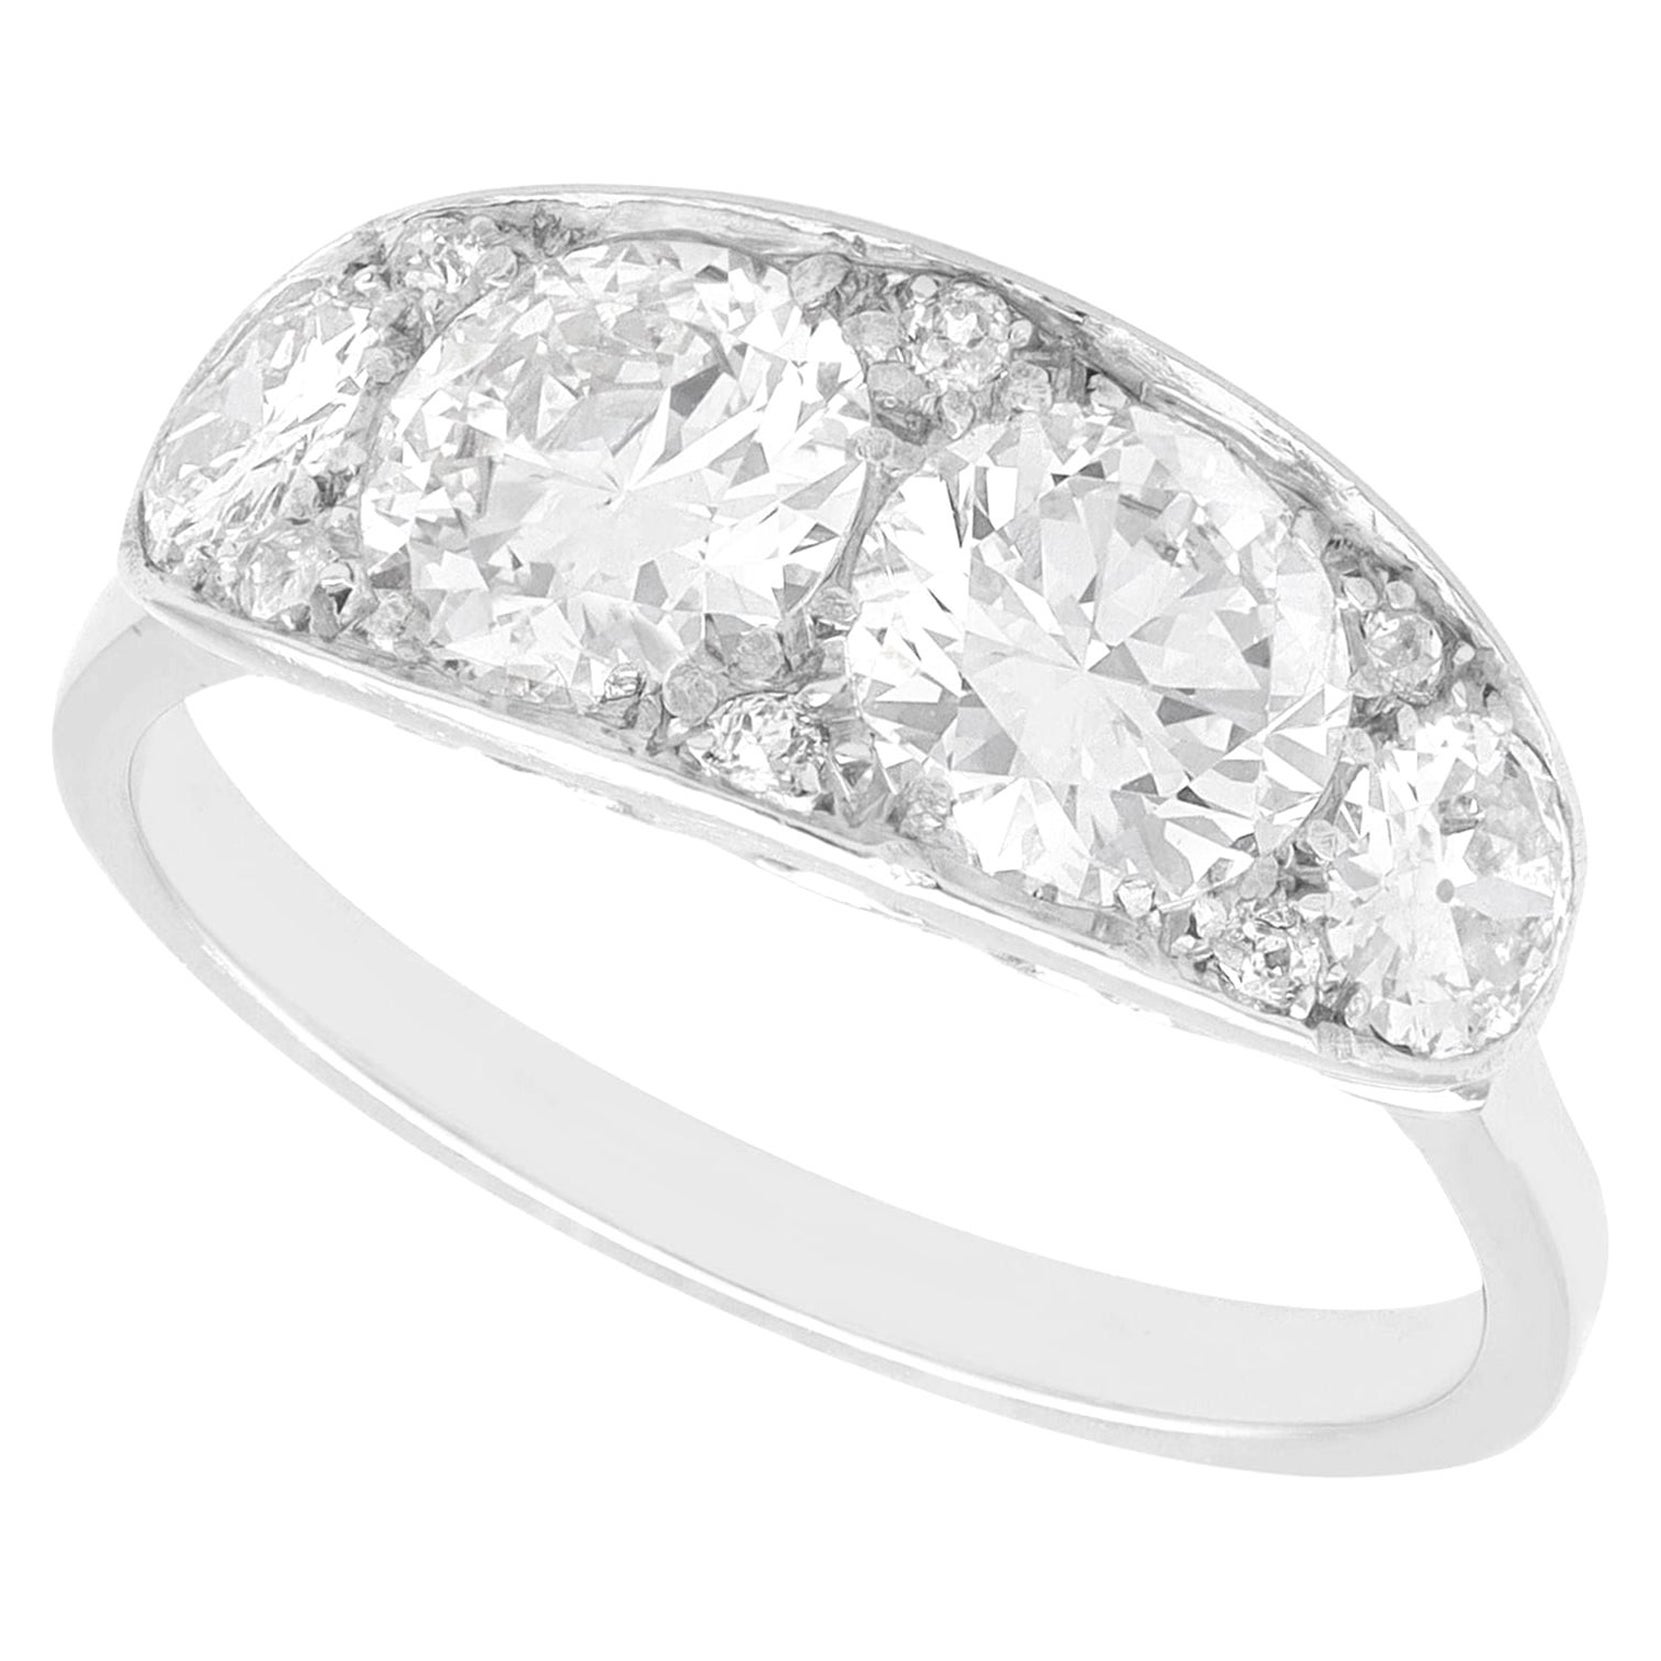 Vintage 2.72 Carat Diamond and 18k White Gold Dress Ring